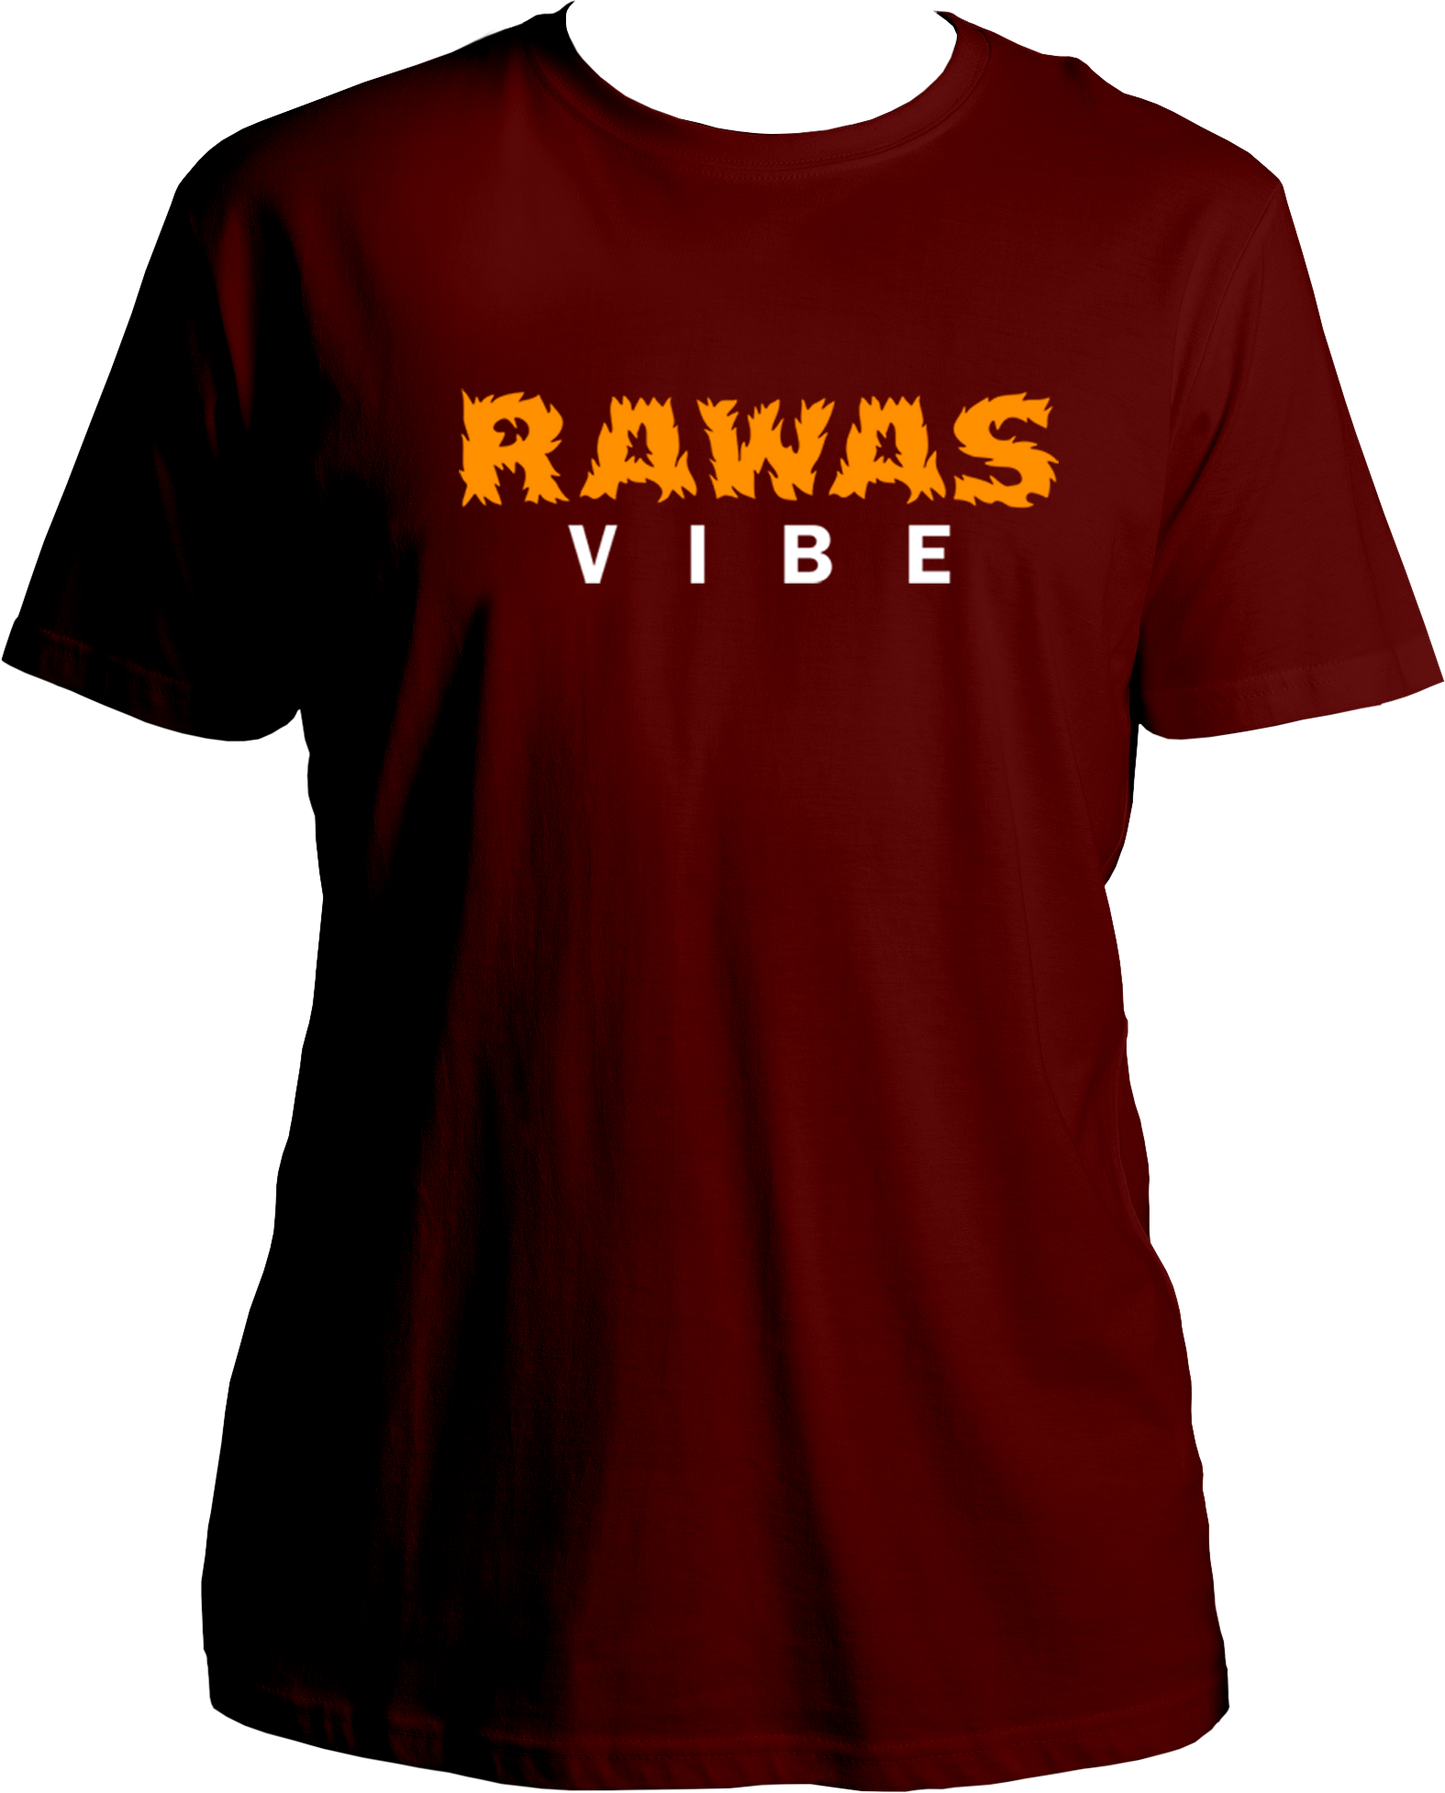 Rawas Vibe Unisex T-Shirts